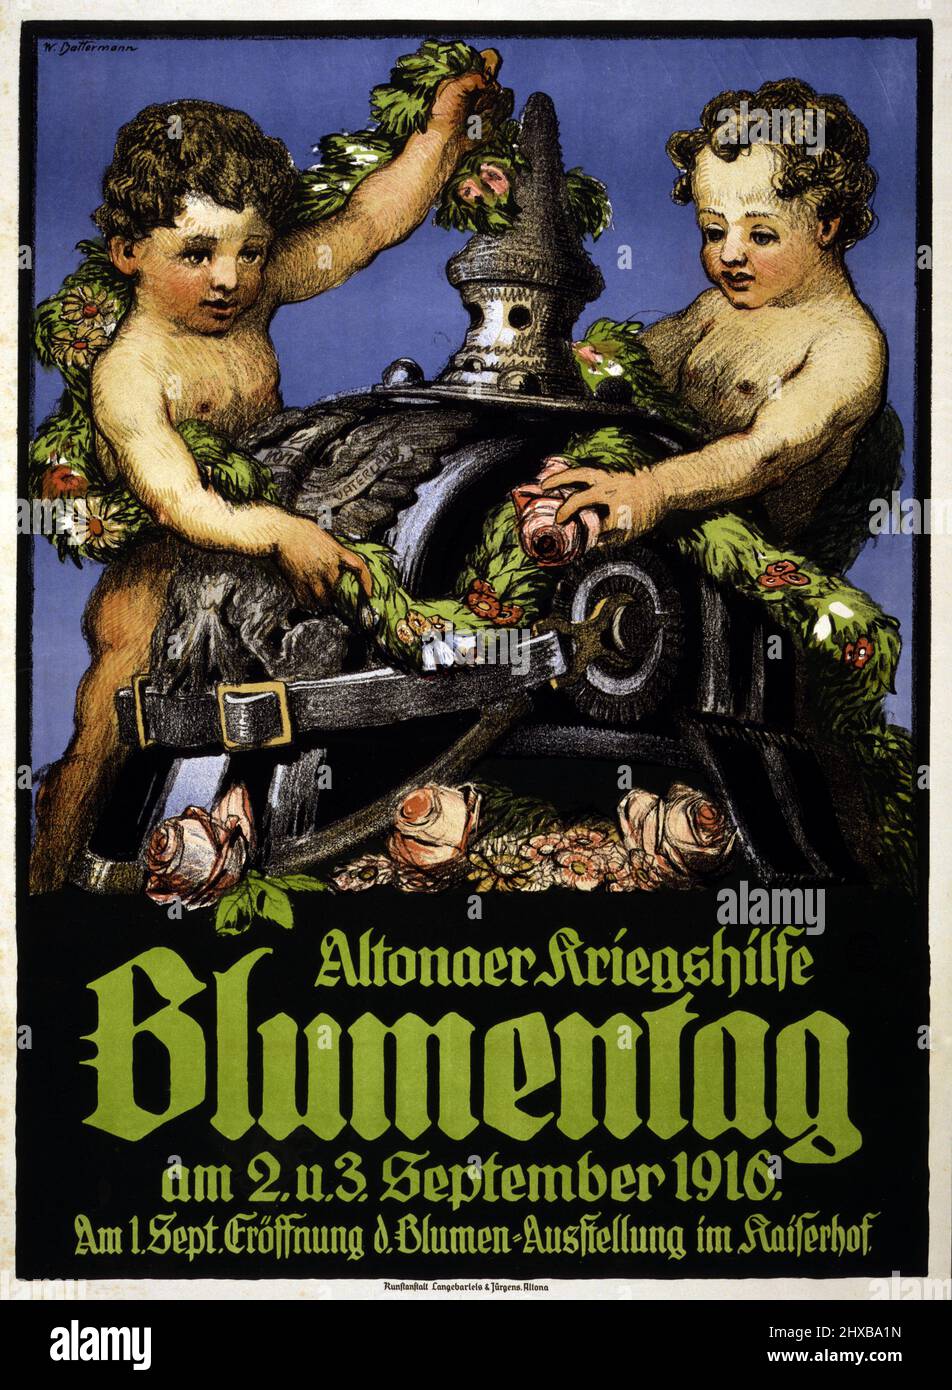 Altonaer Kriegshilfe Blumentag by Wilhelm Battermann, 1916. Poster showing two cherubs decorating a German helmet with garlands of flowers. Stock Photo